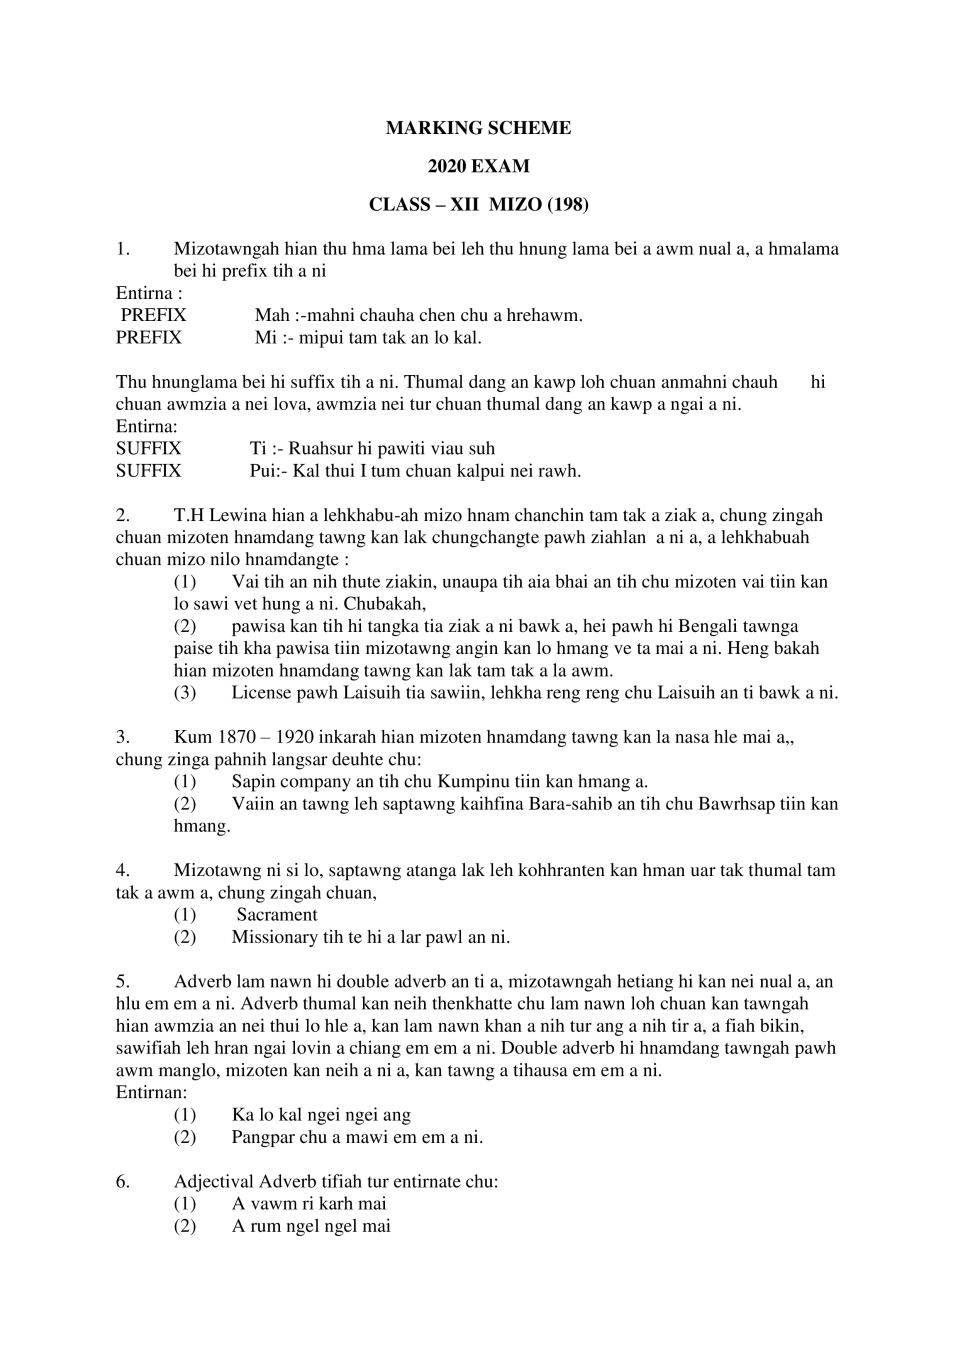 CBSE Class 12 Marking Scheme 2020 for Mizo - Page 1